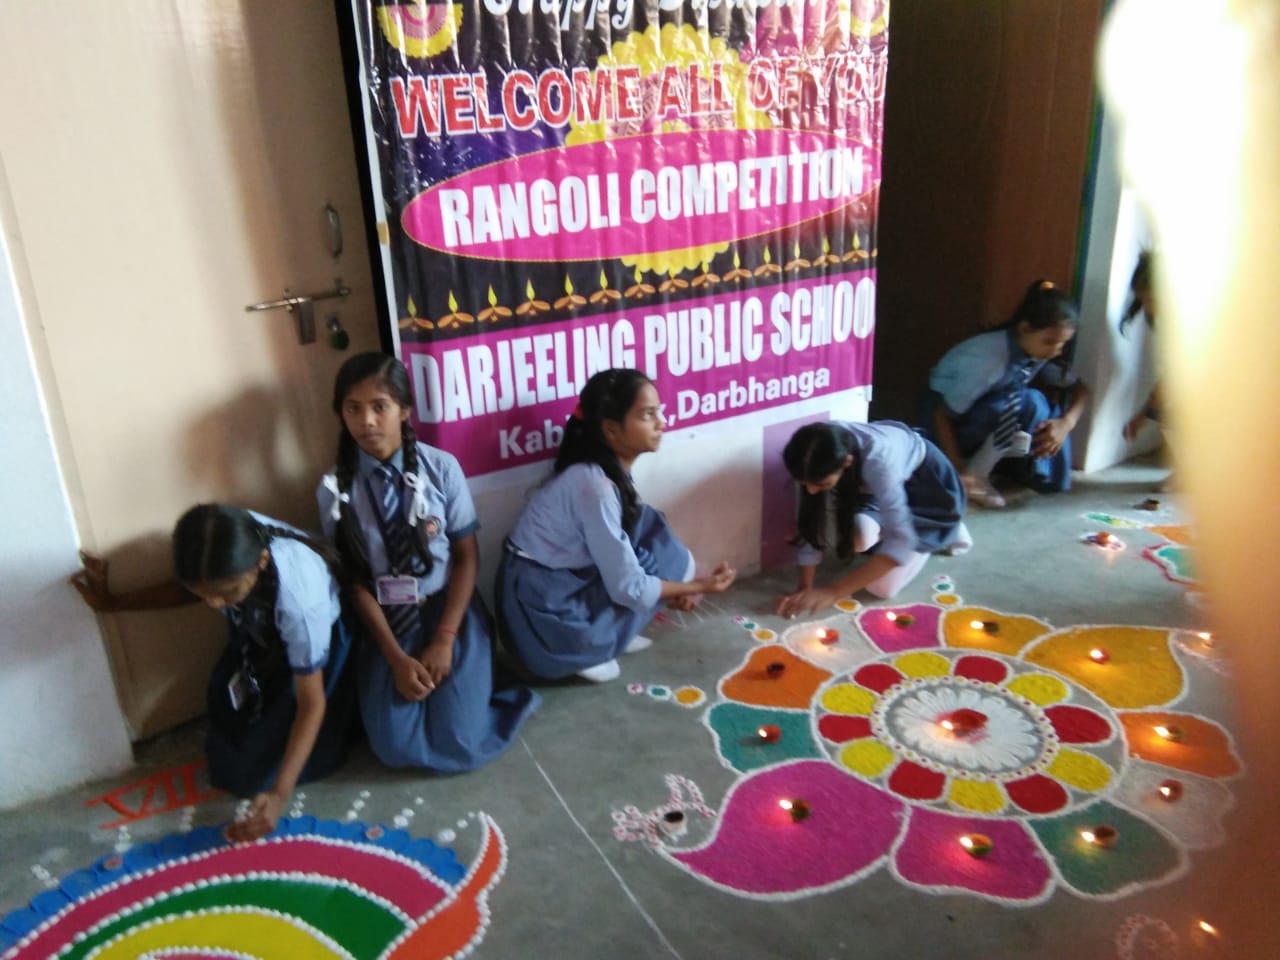 Darjeeling Public School in Darbhanga